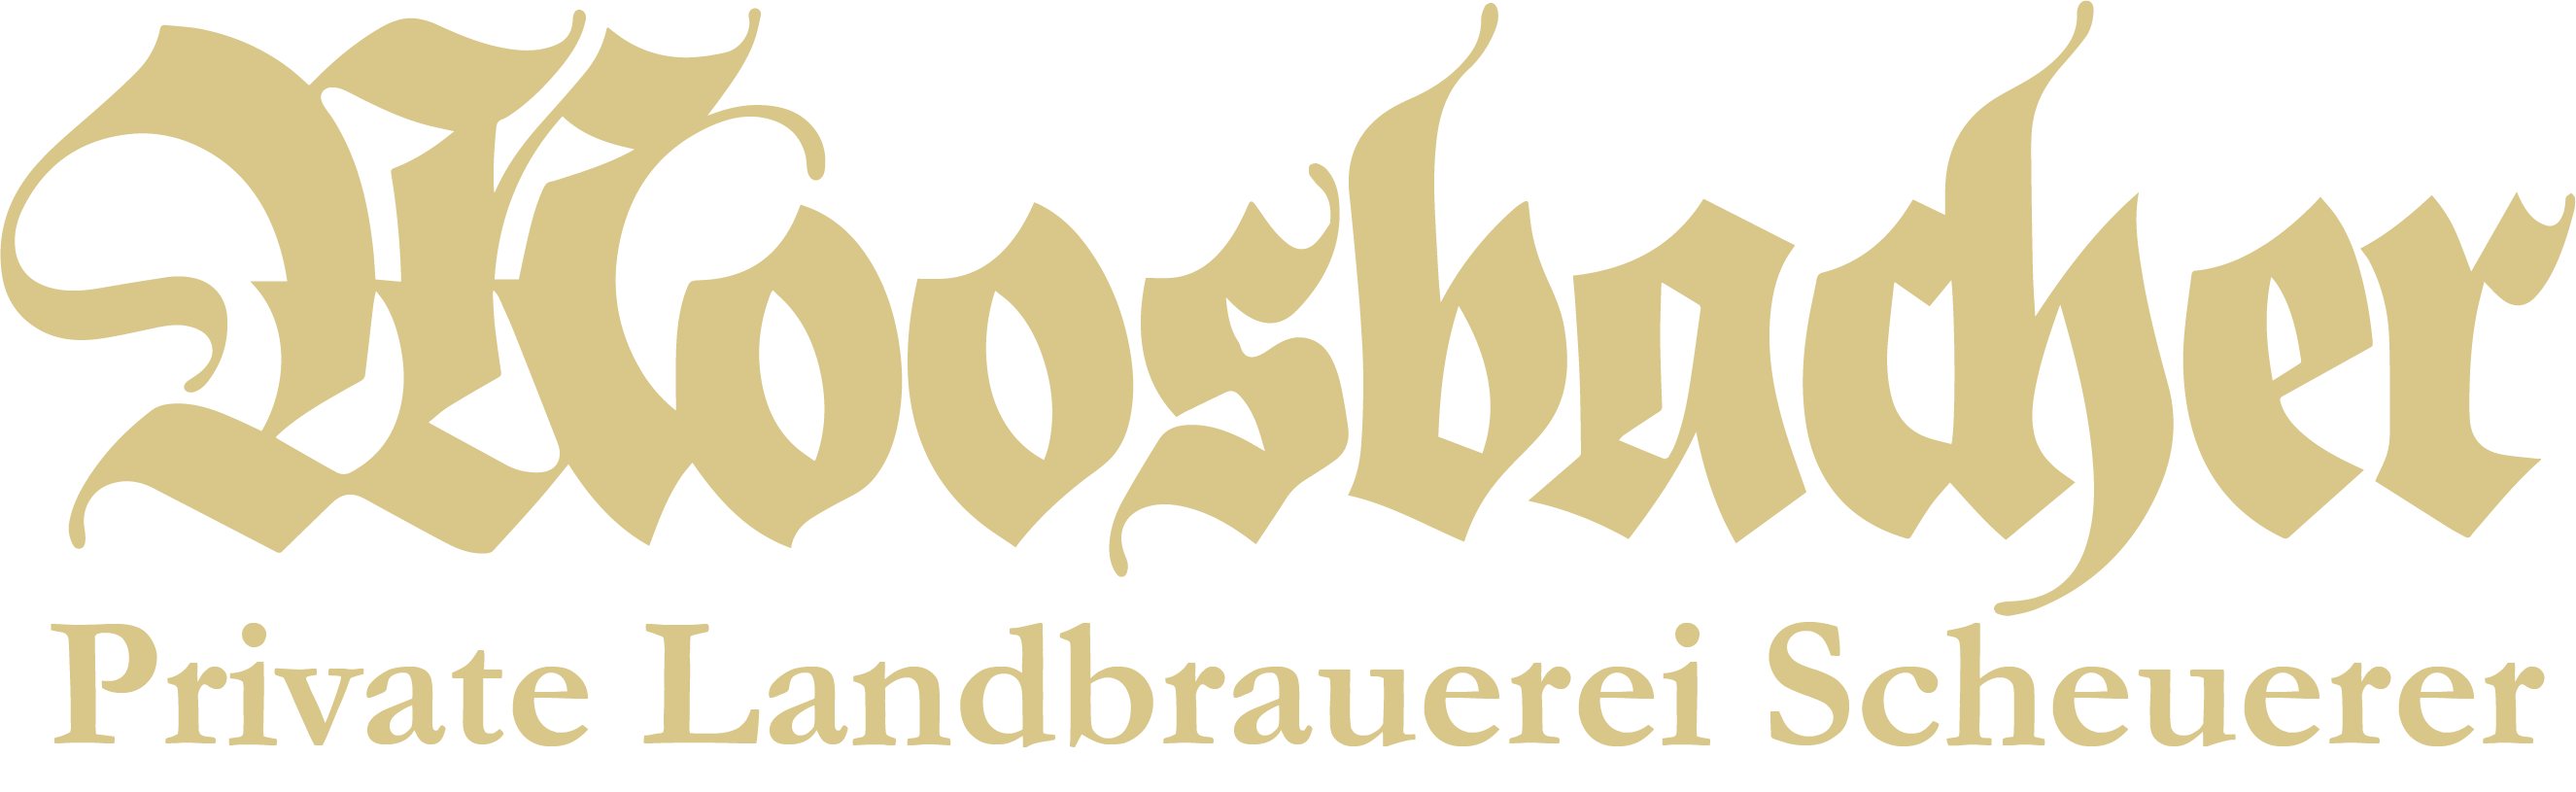 Moosbacher private Landbrauerei